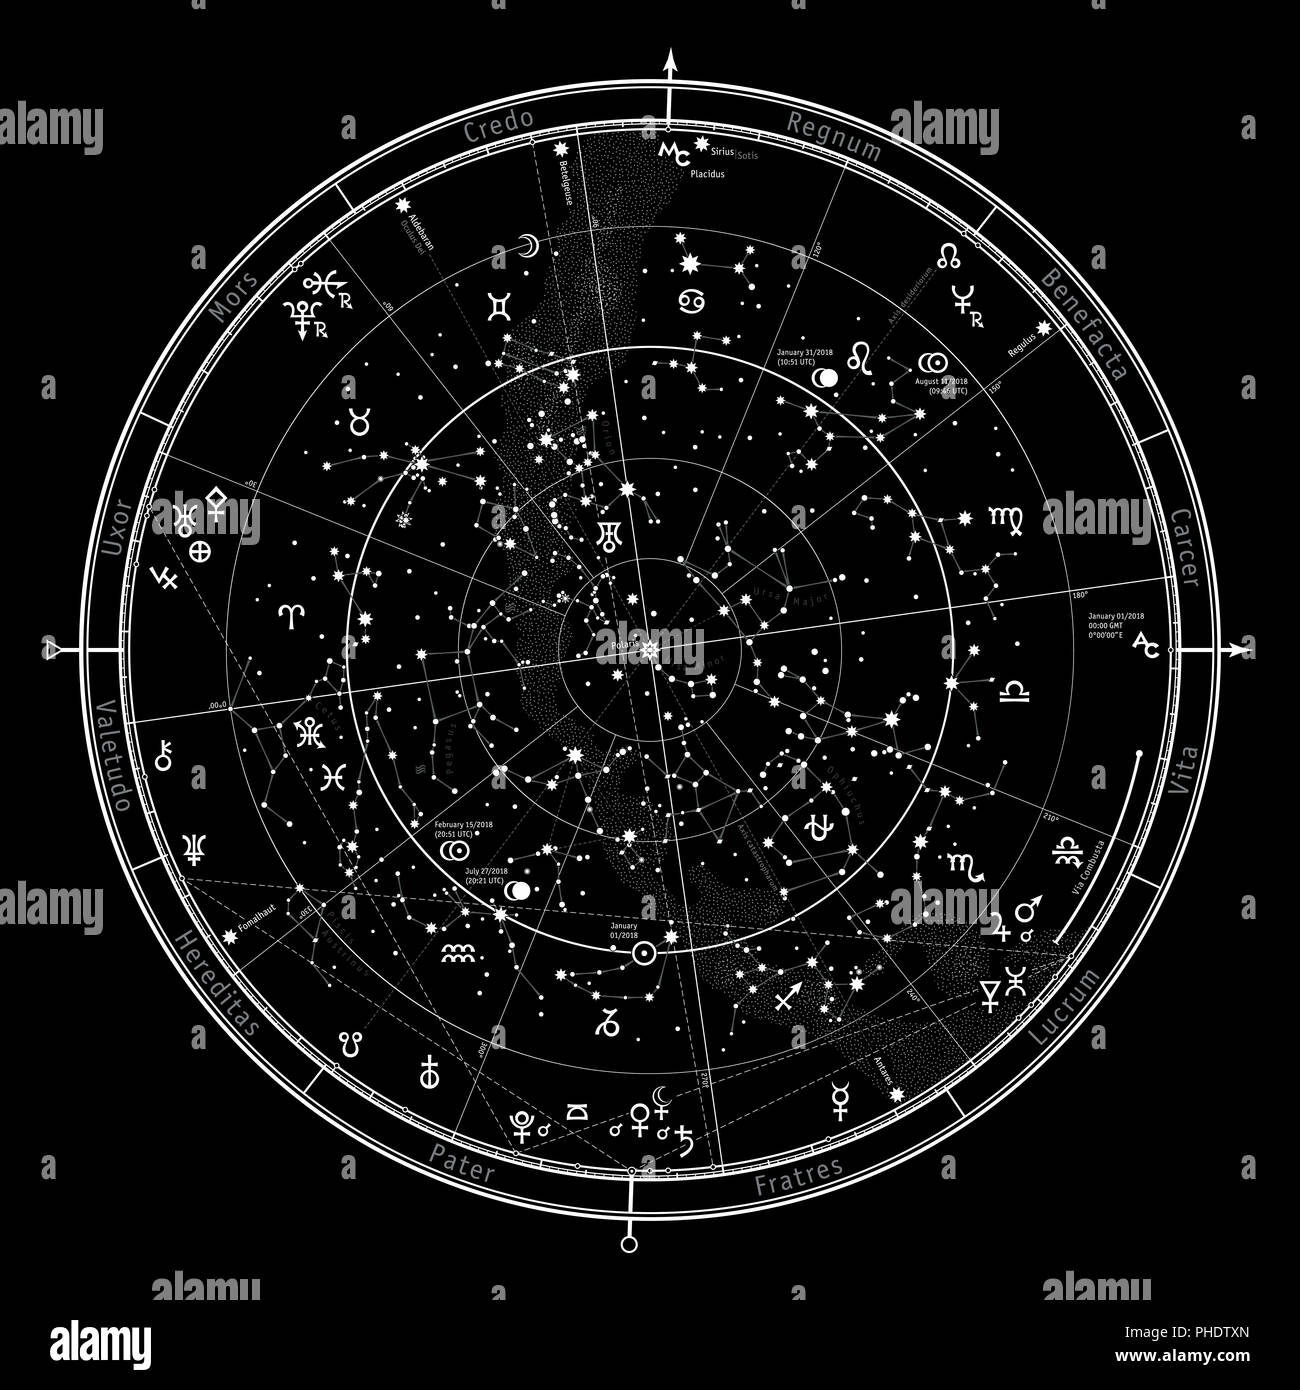 Astrological horoscope on January 1, 2018. Stock Photo